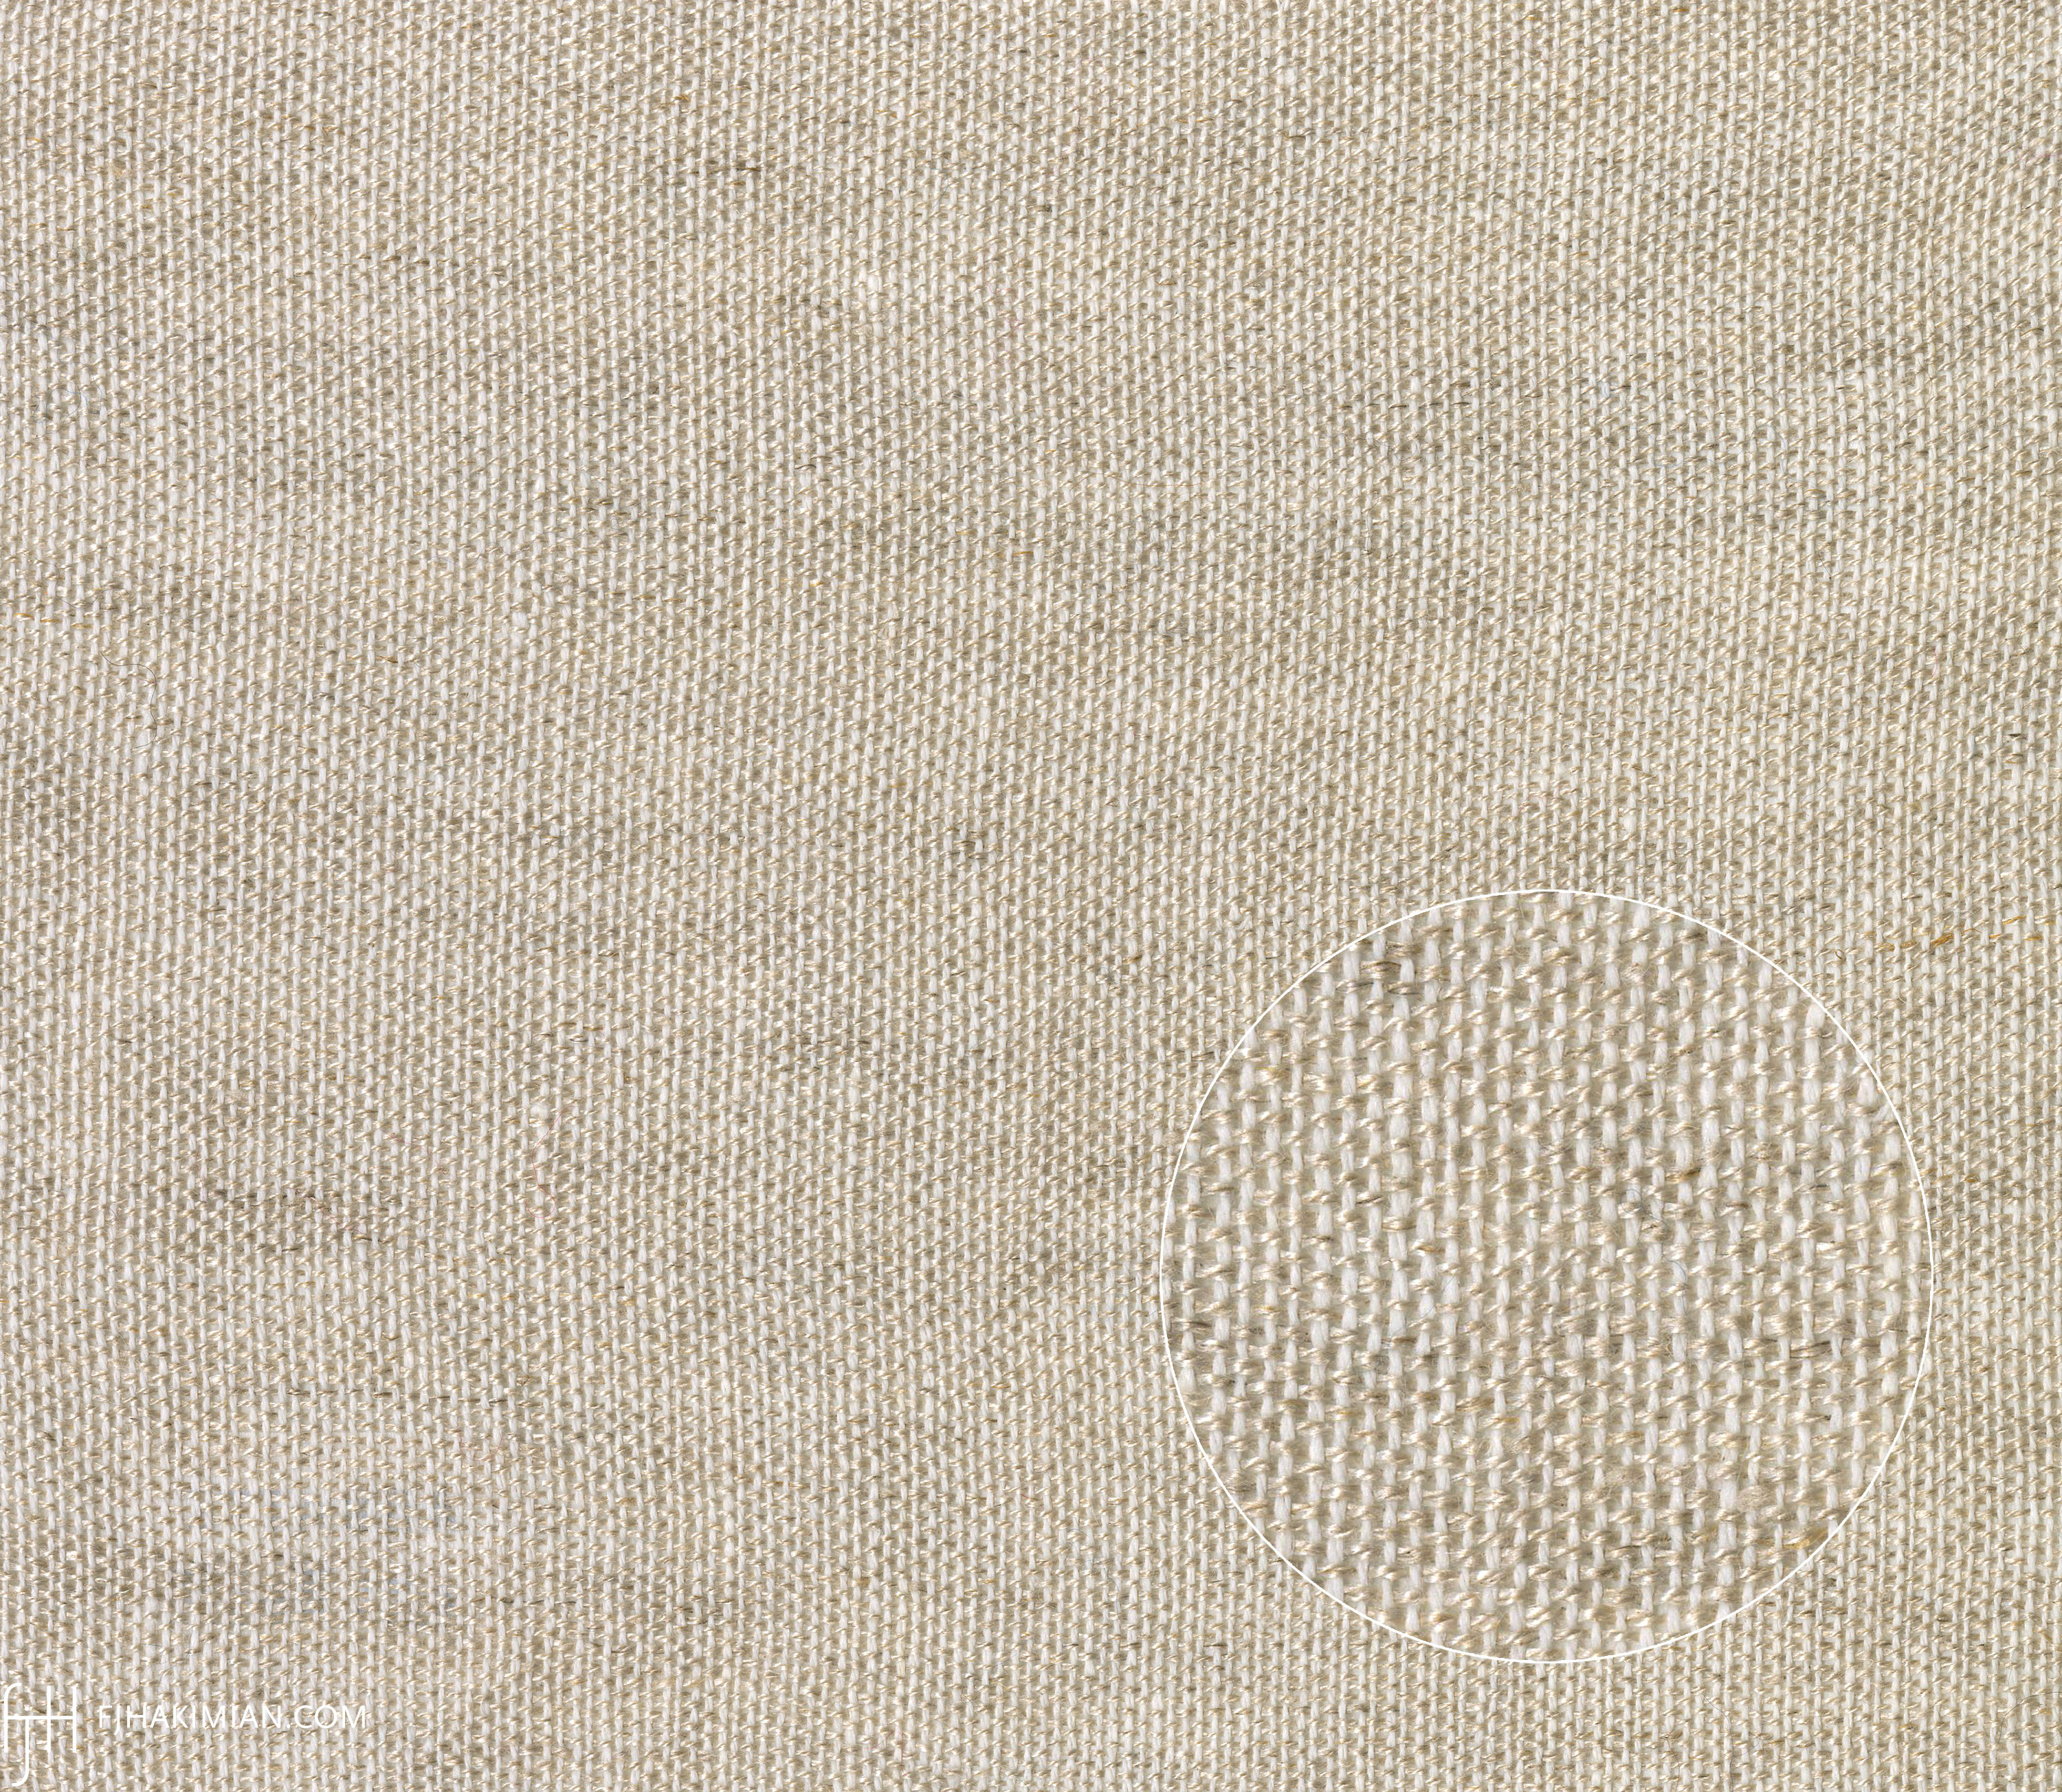 AB-LTLBLGF Upholstery Fabric | FJ Hakimian Carpet Gallery, New York 